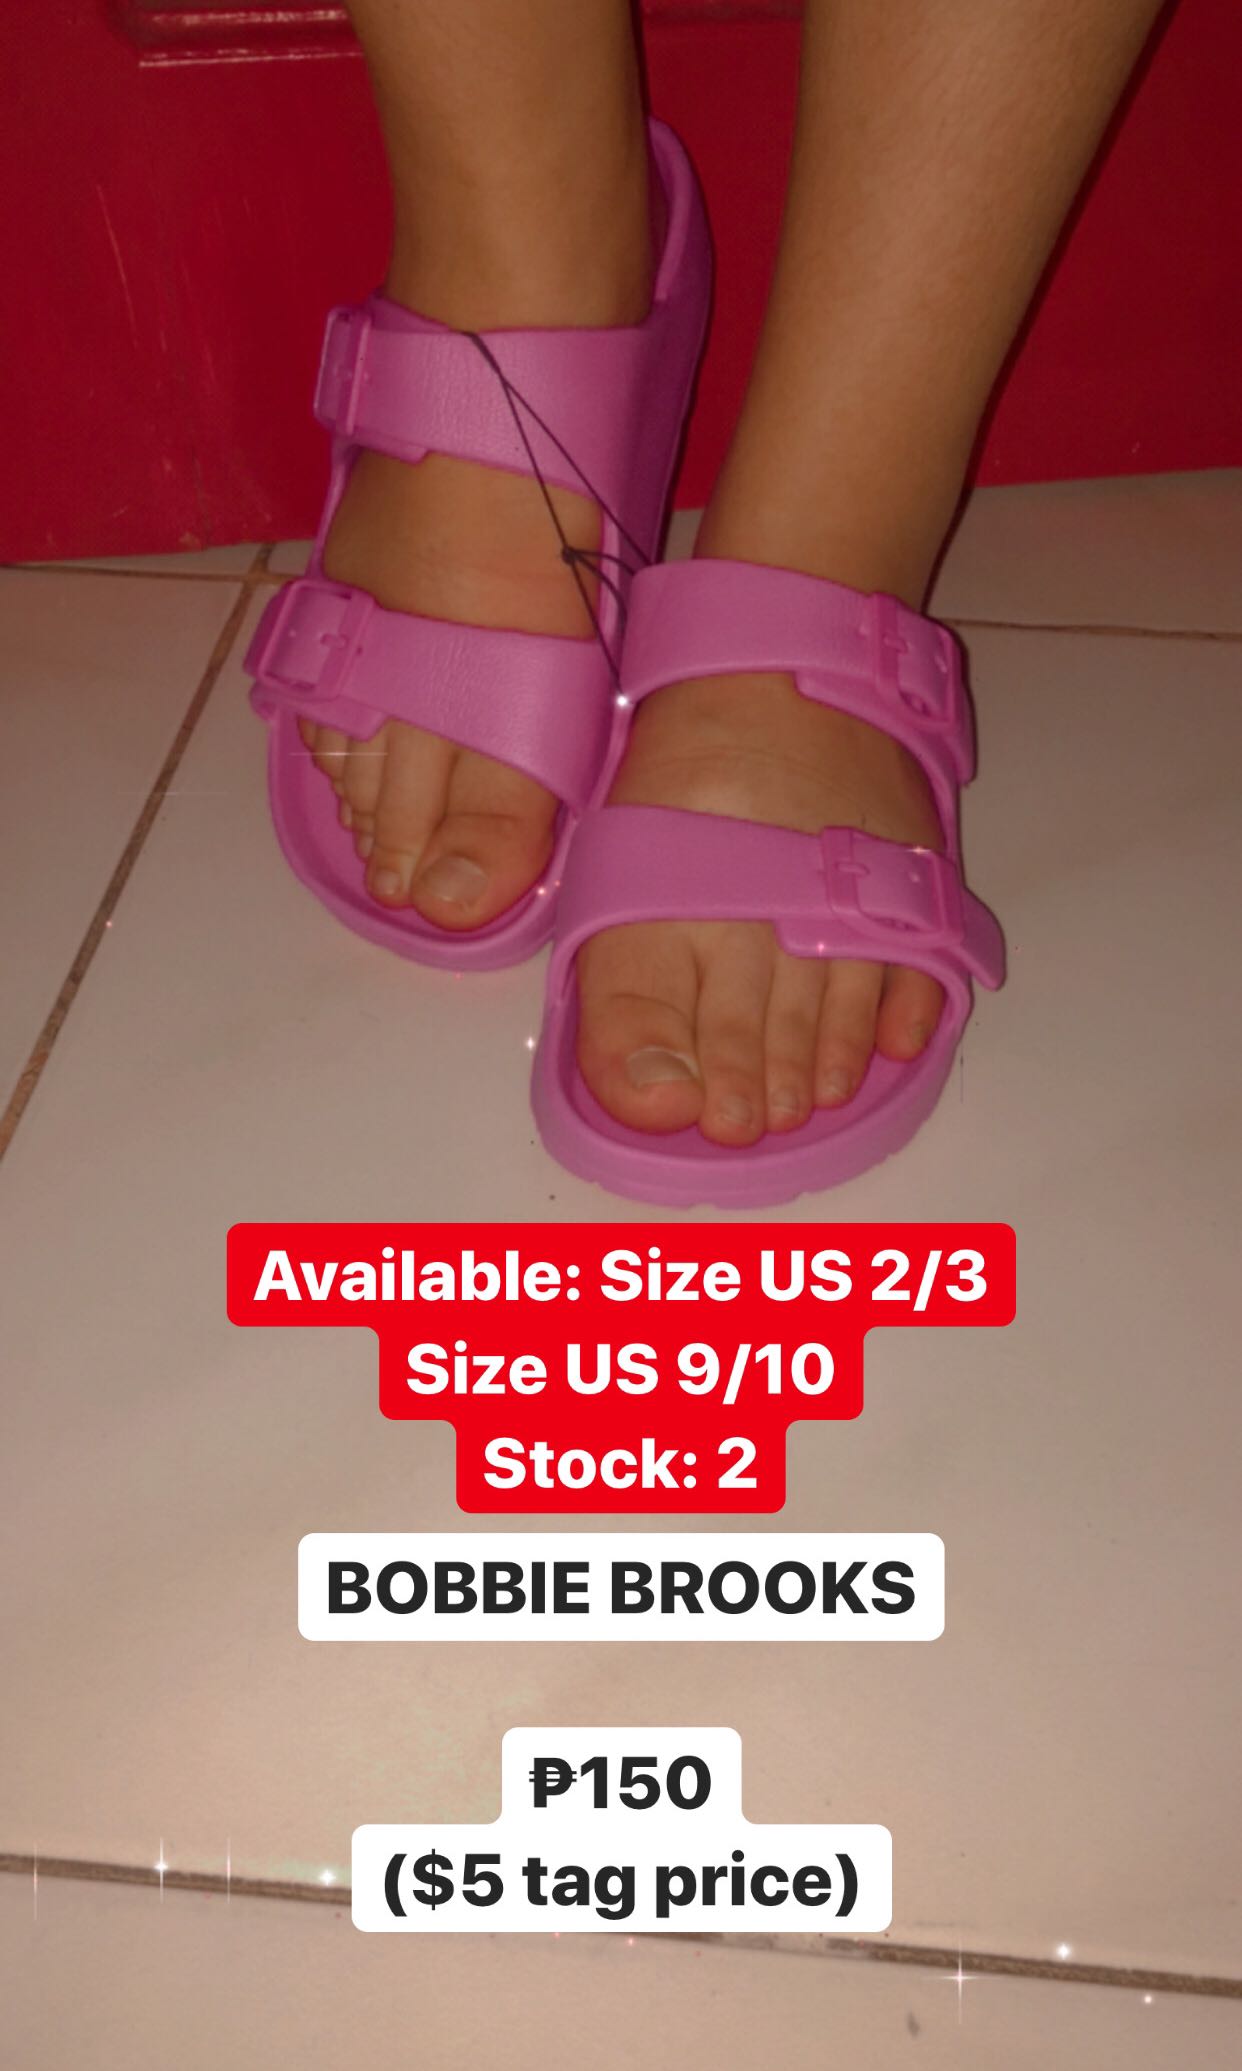 bobbie brooks slippers